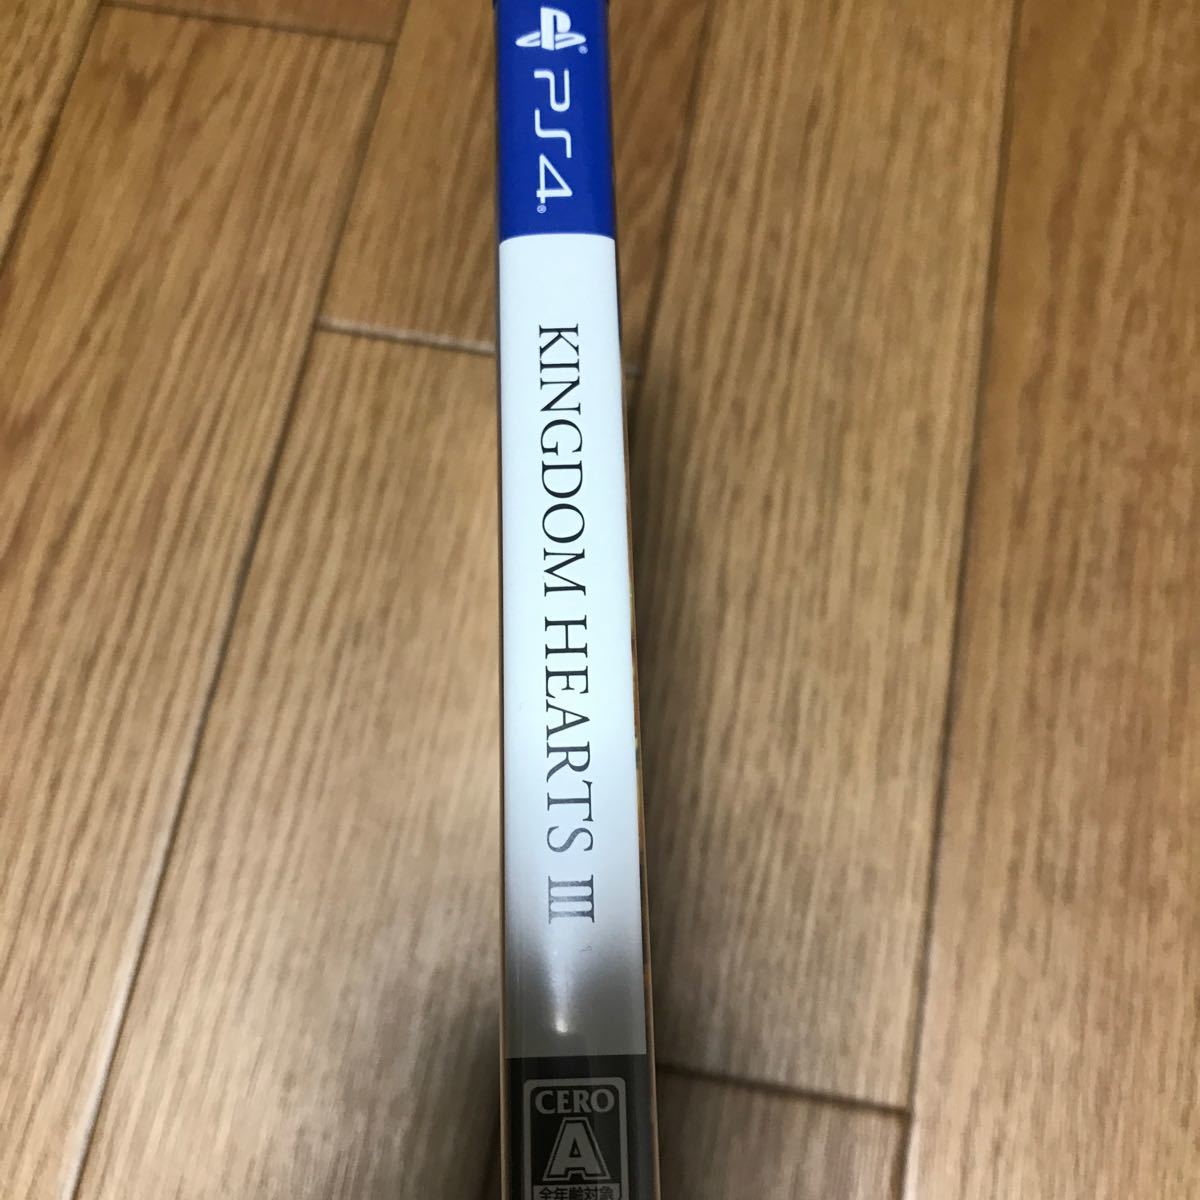 【PS4】 キングダム ハーツIII